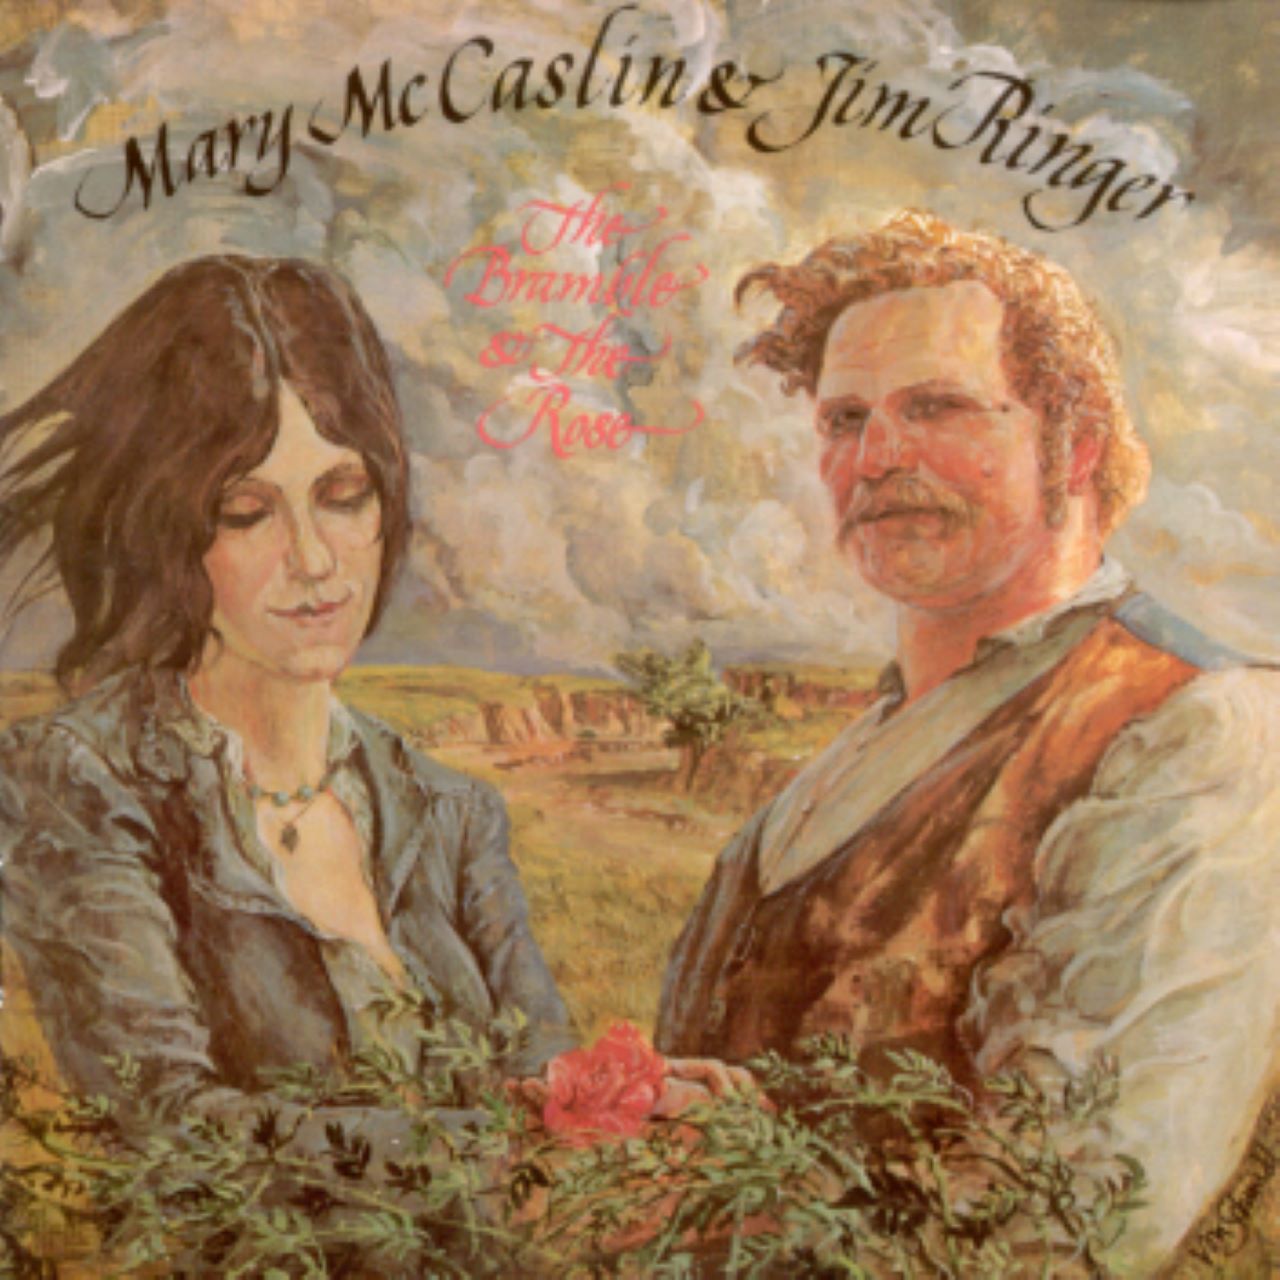 Mary McCaslin & Jim Ringer - The Bramble & The Rose cover album